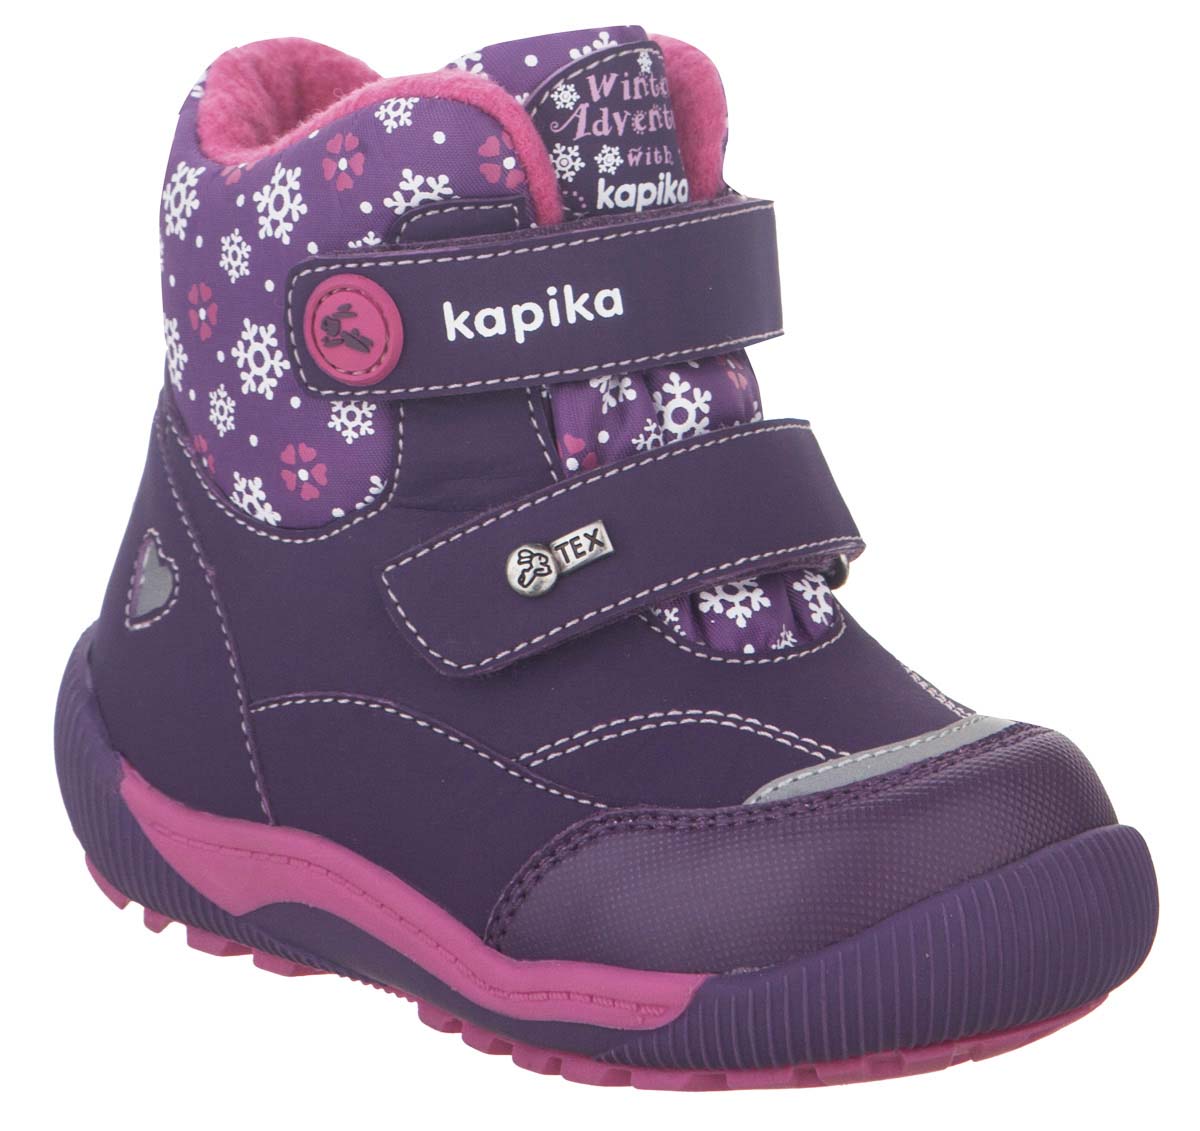 Ботинки для девочки Kapika KapiTEX, цвет: сиреневый. 41185-1. Размер 22